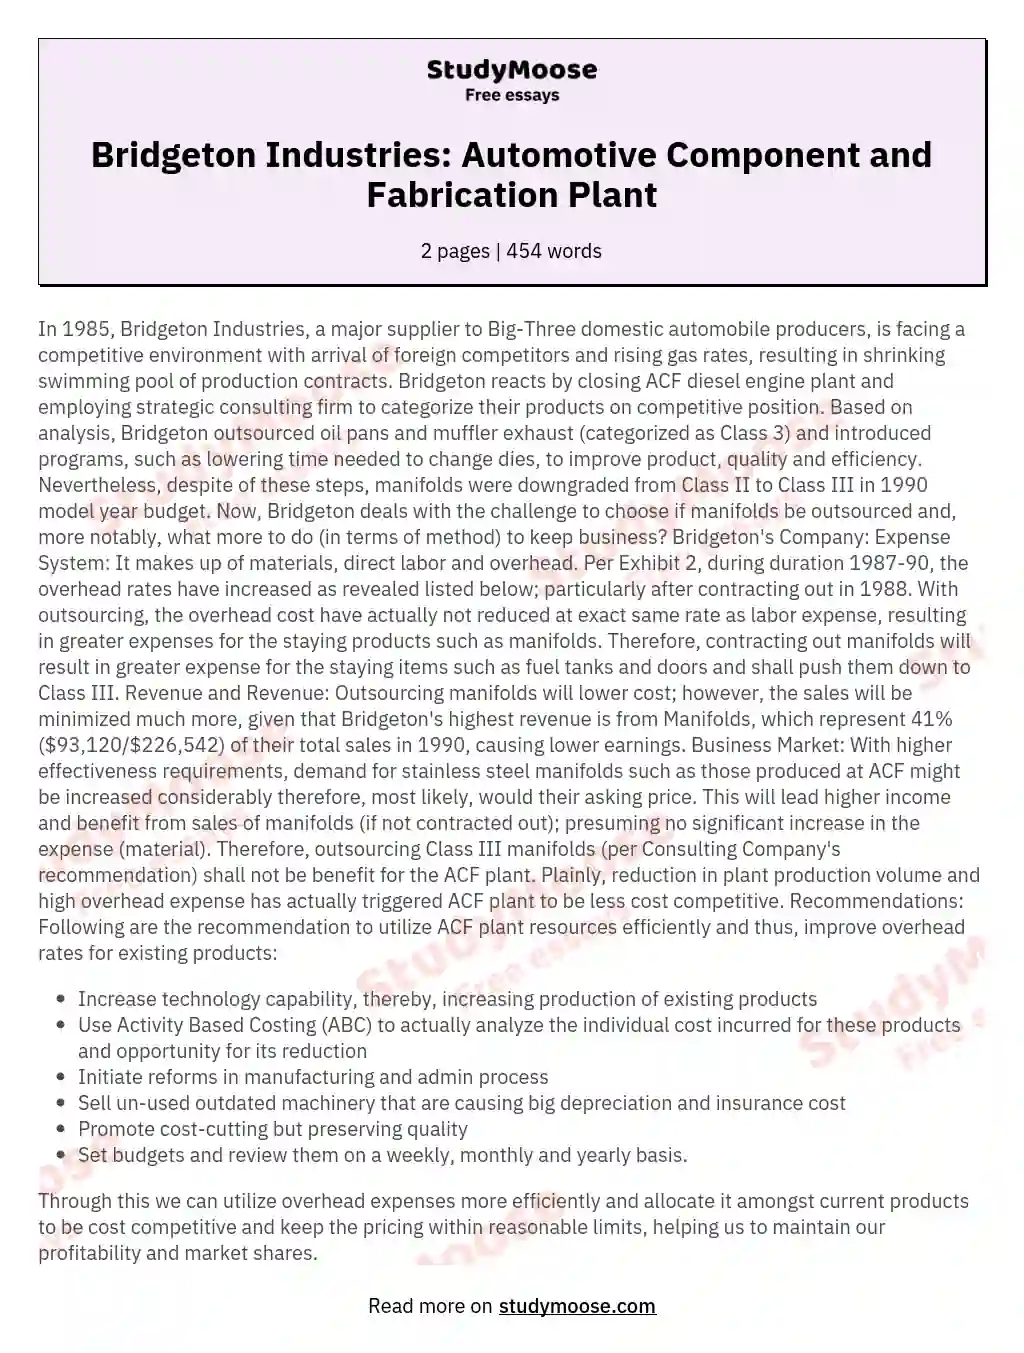 Bridgeton Industries: Automotive Component and Fabrication Plant